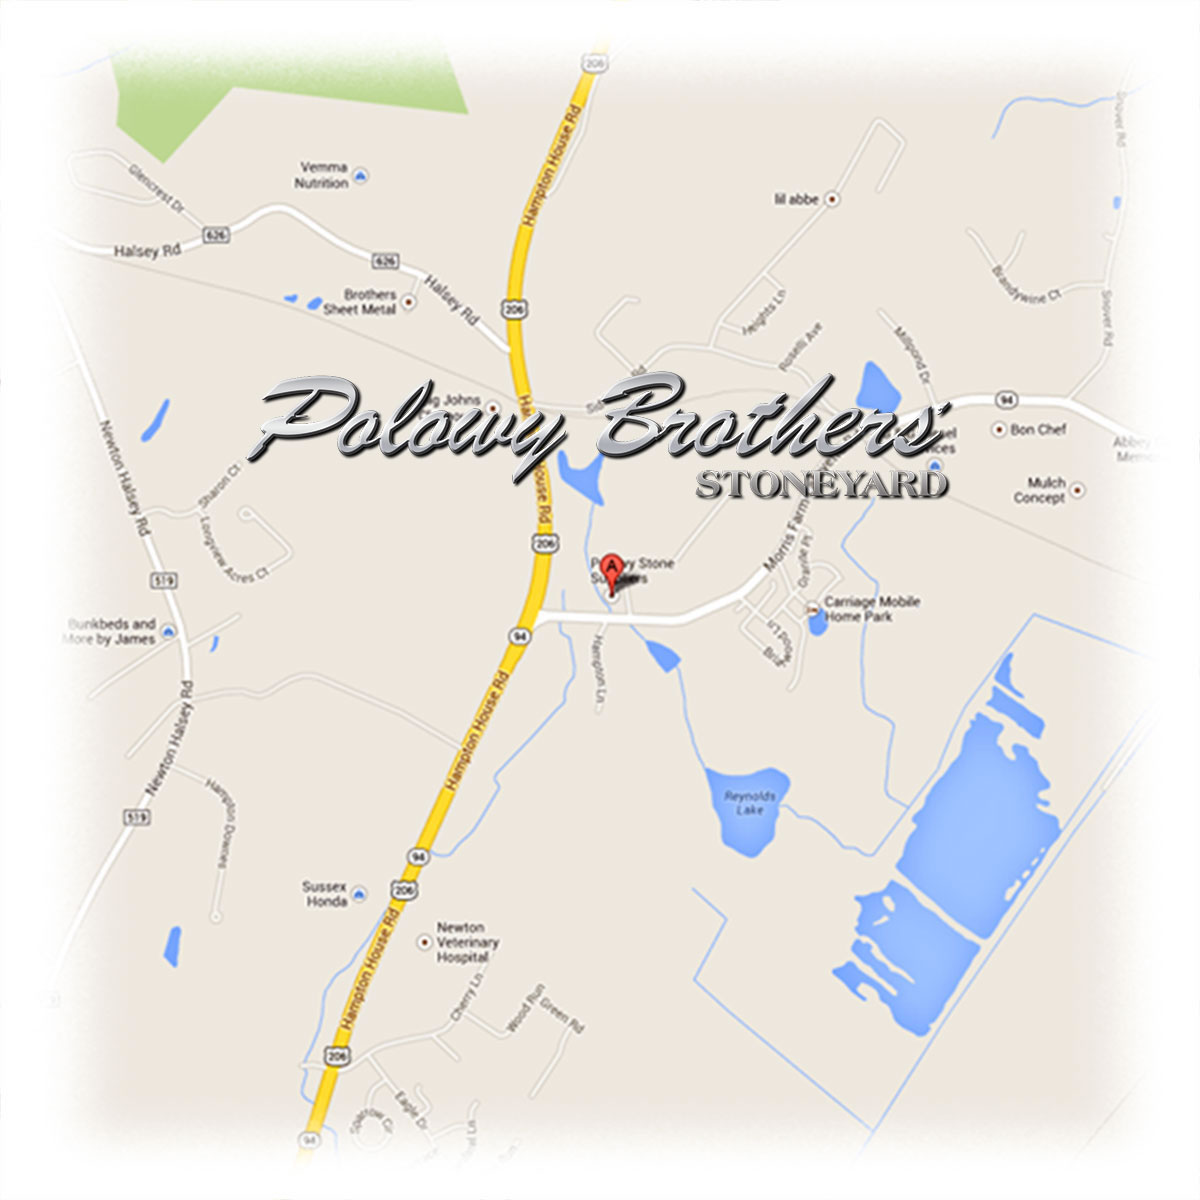 Polowy Brothers’ Stoneyard in Lafayette, NJ